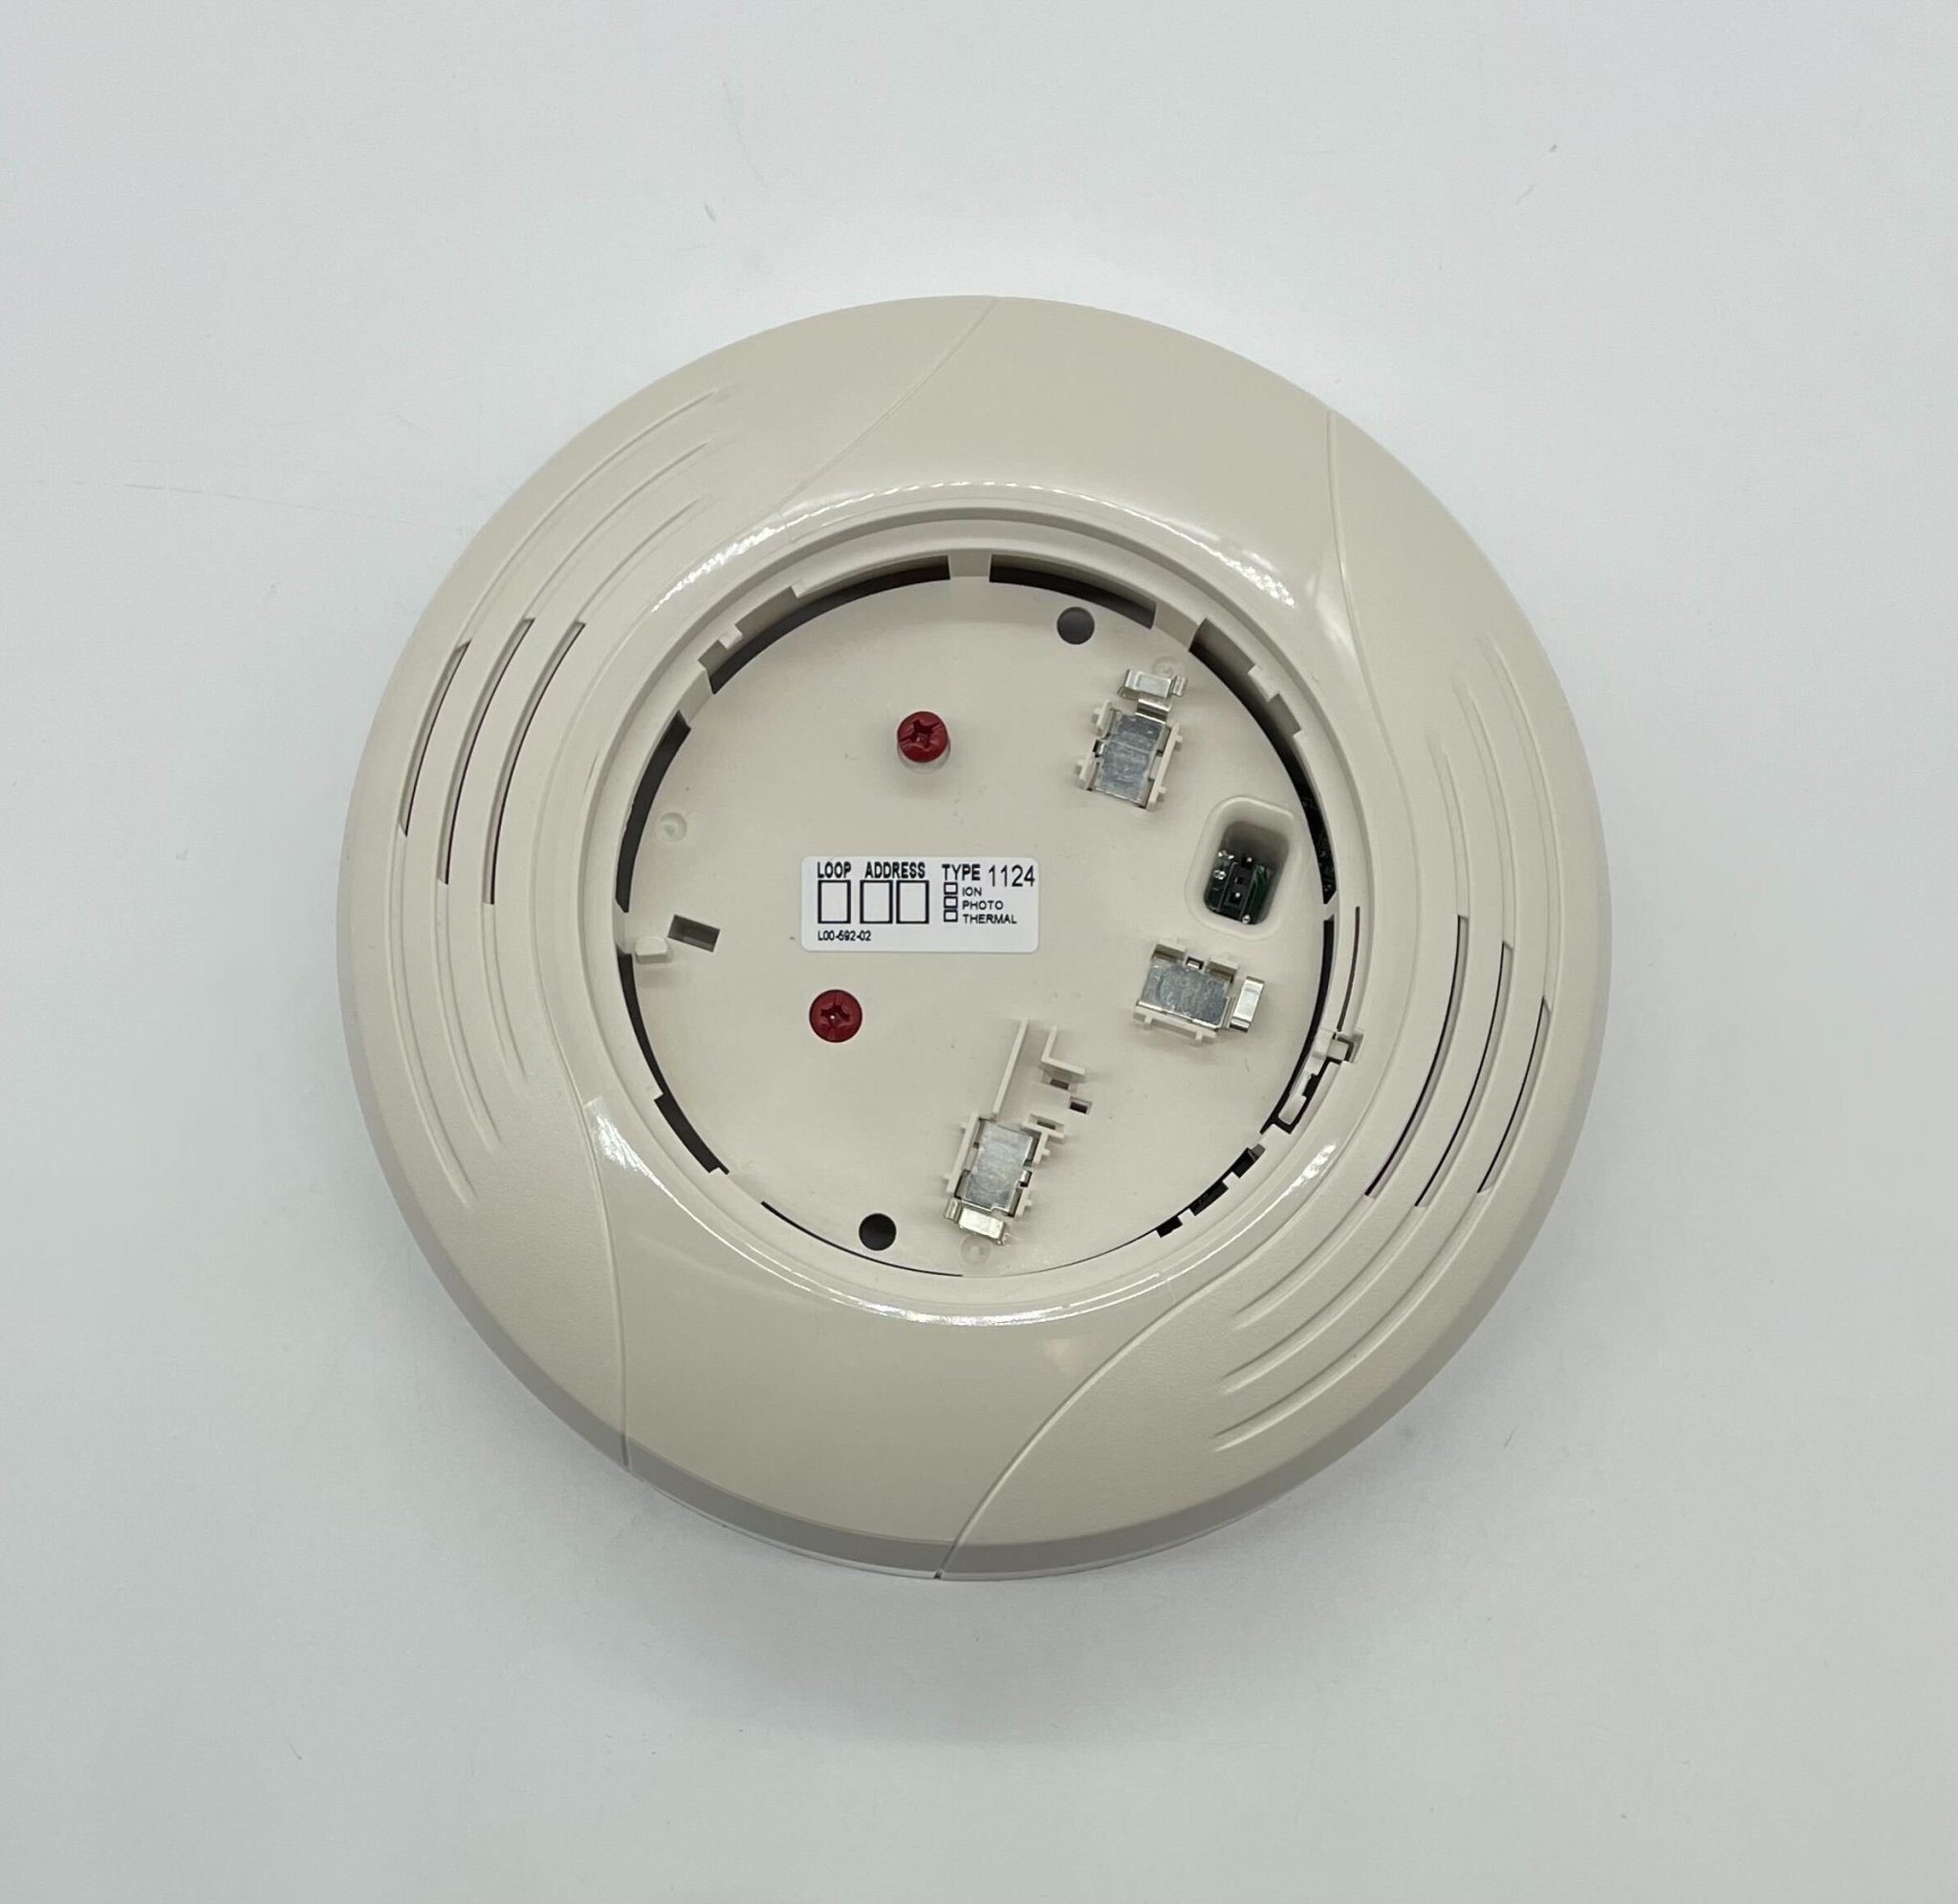 System Sensor B200SR - The Fire Alarm Supplier